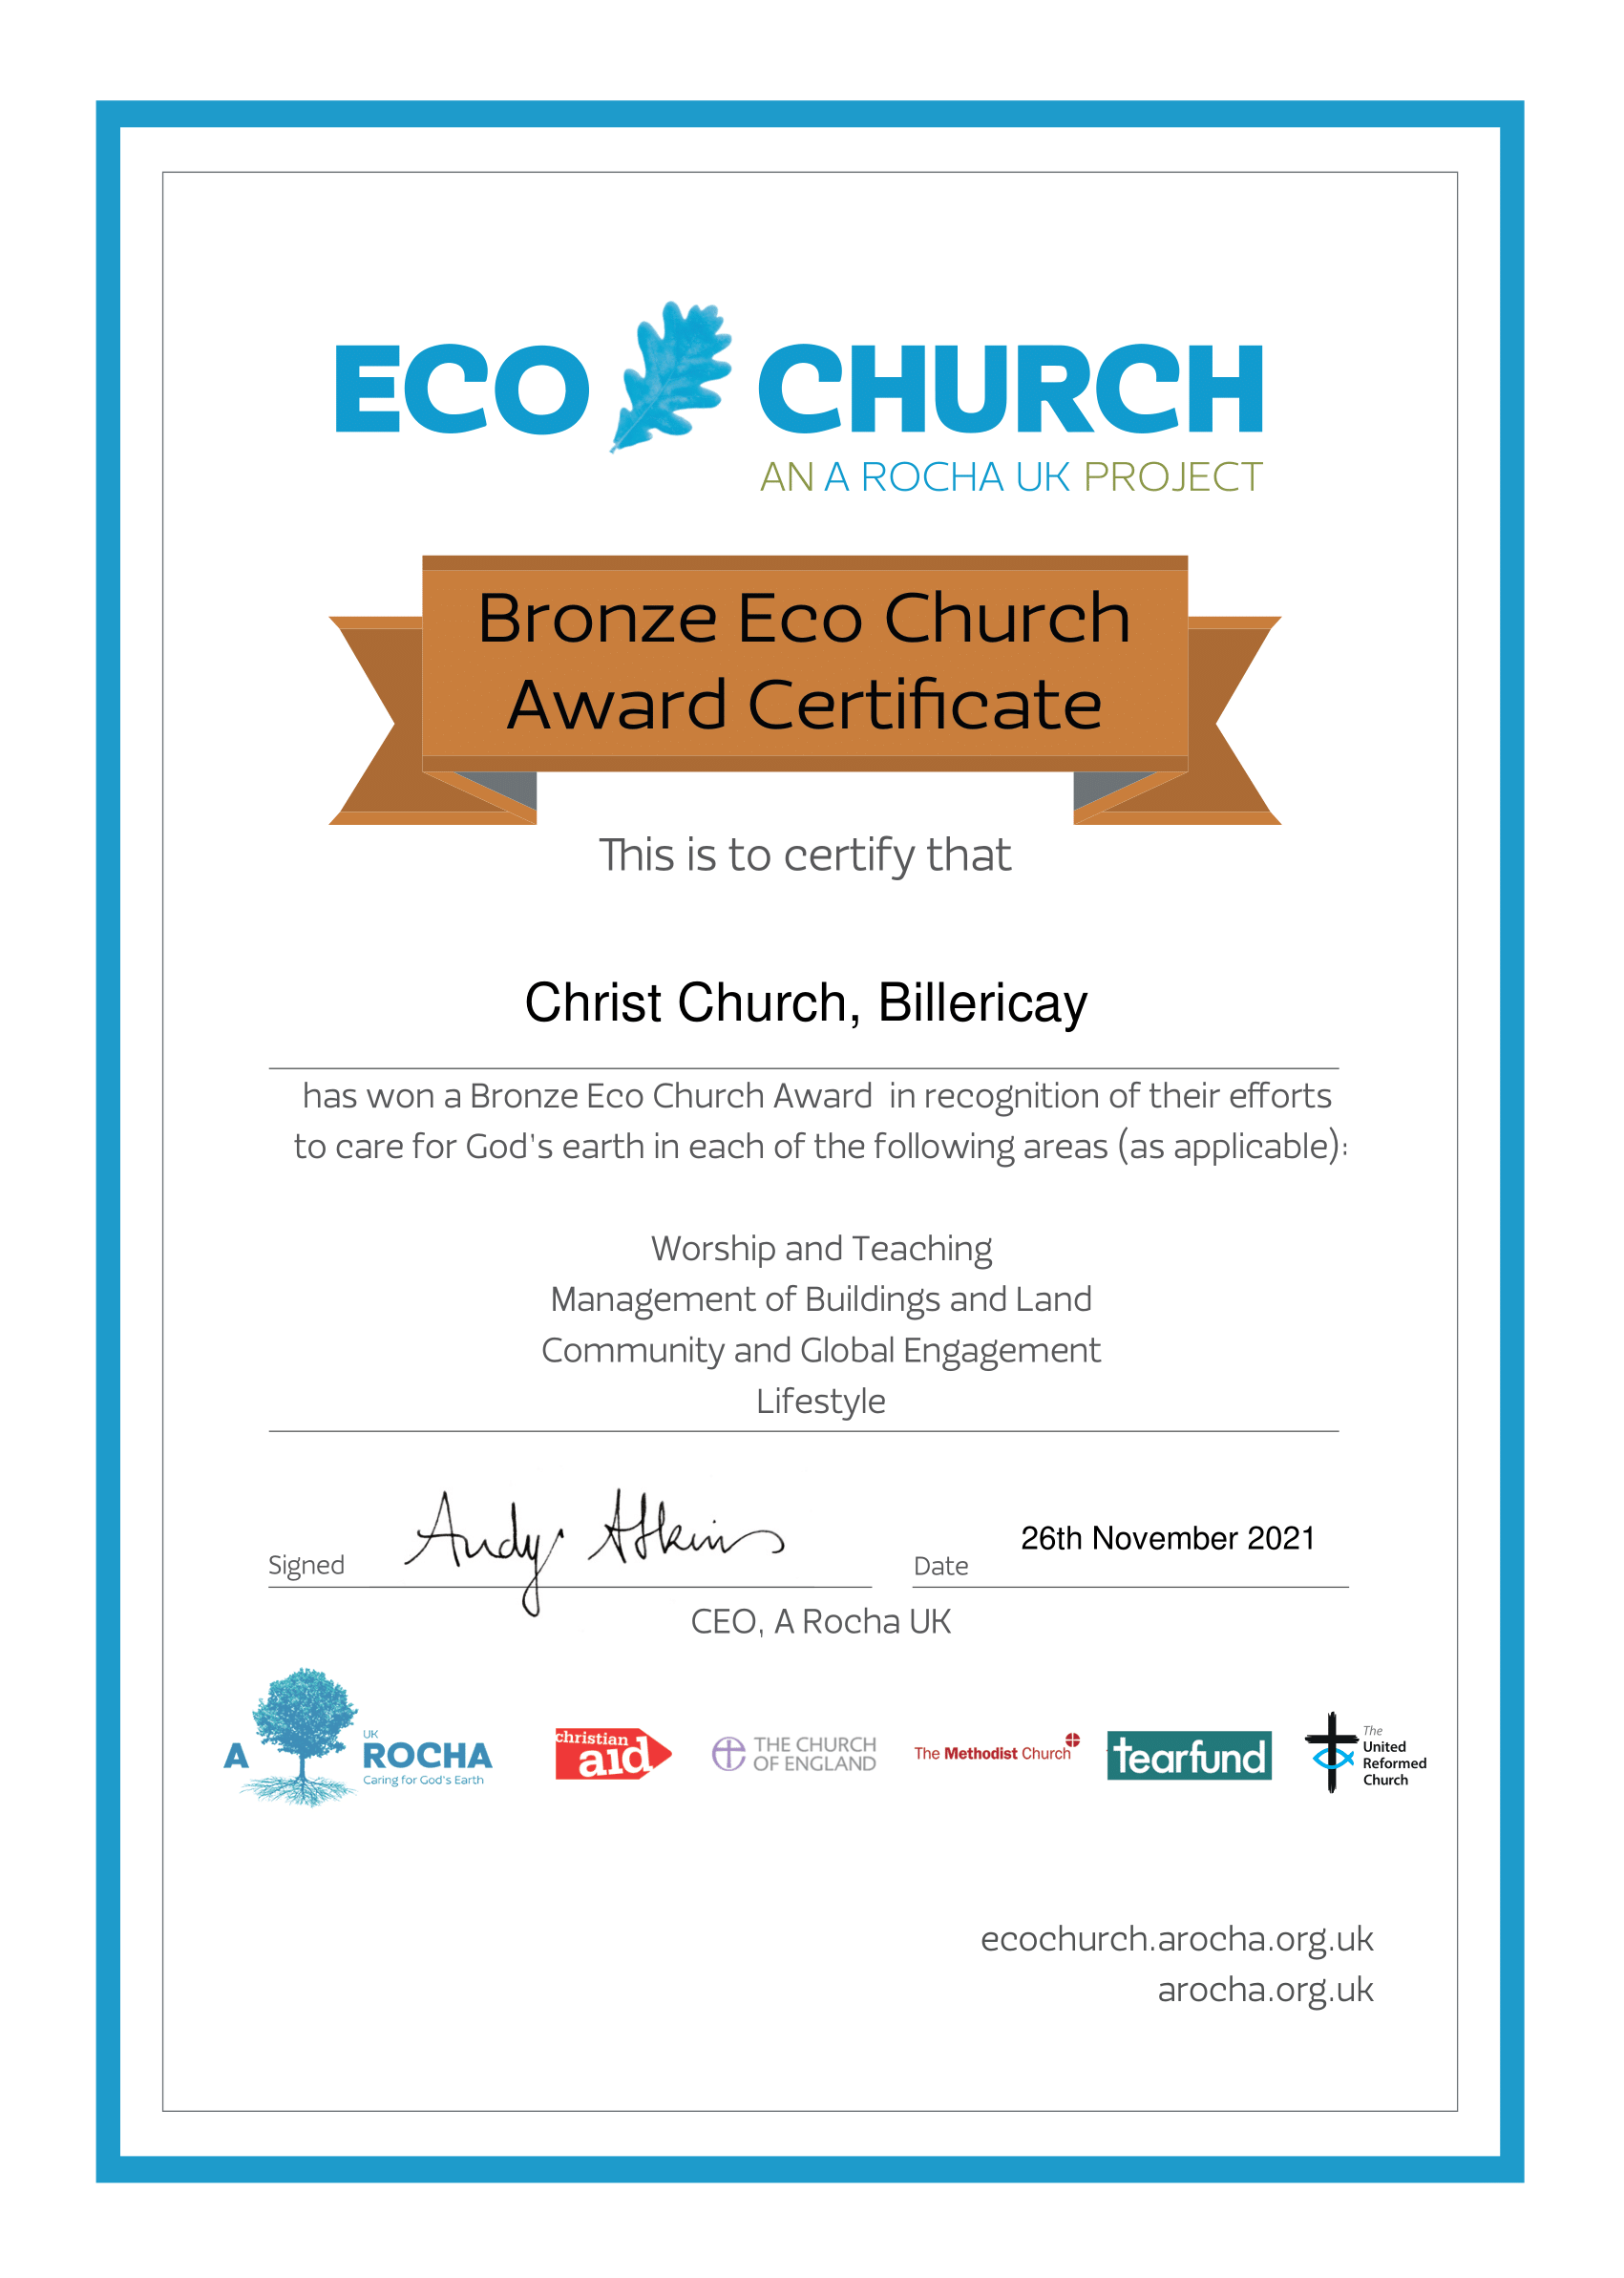 Christ Church, Billericay - Eco Church Award Certificate Bronze